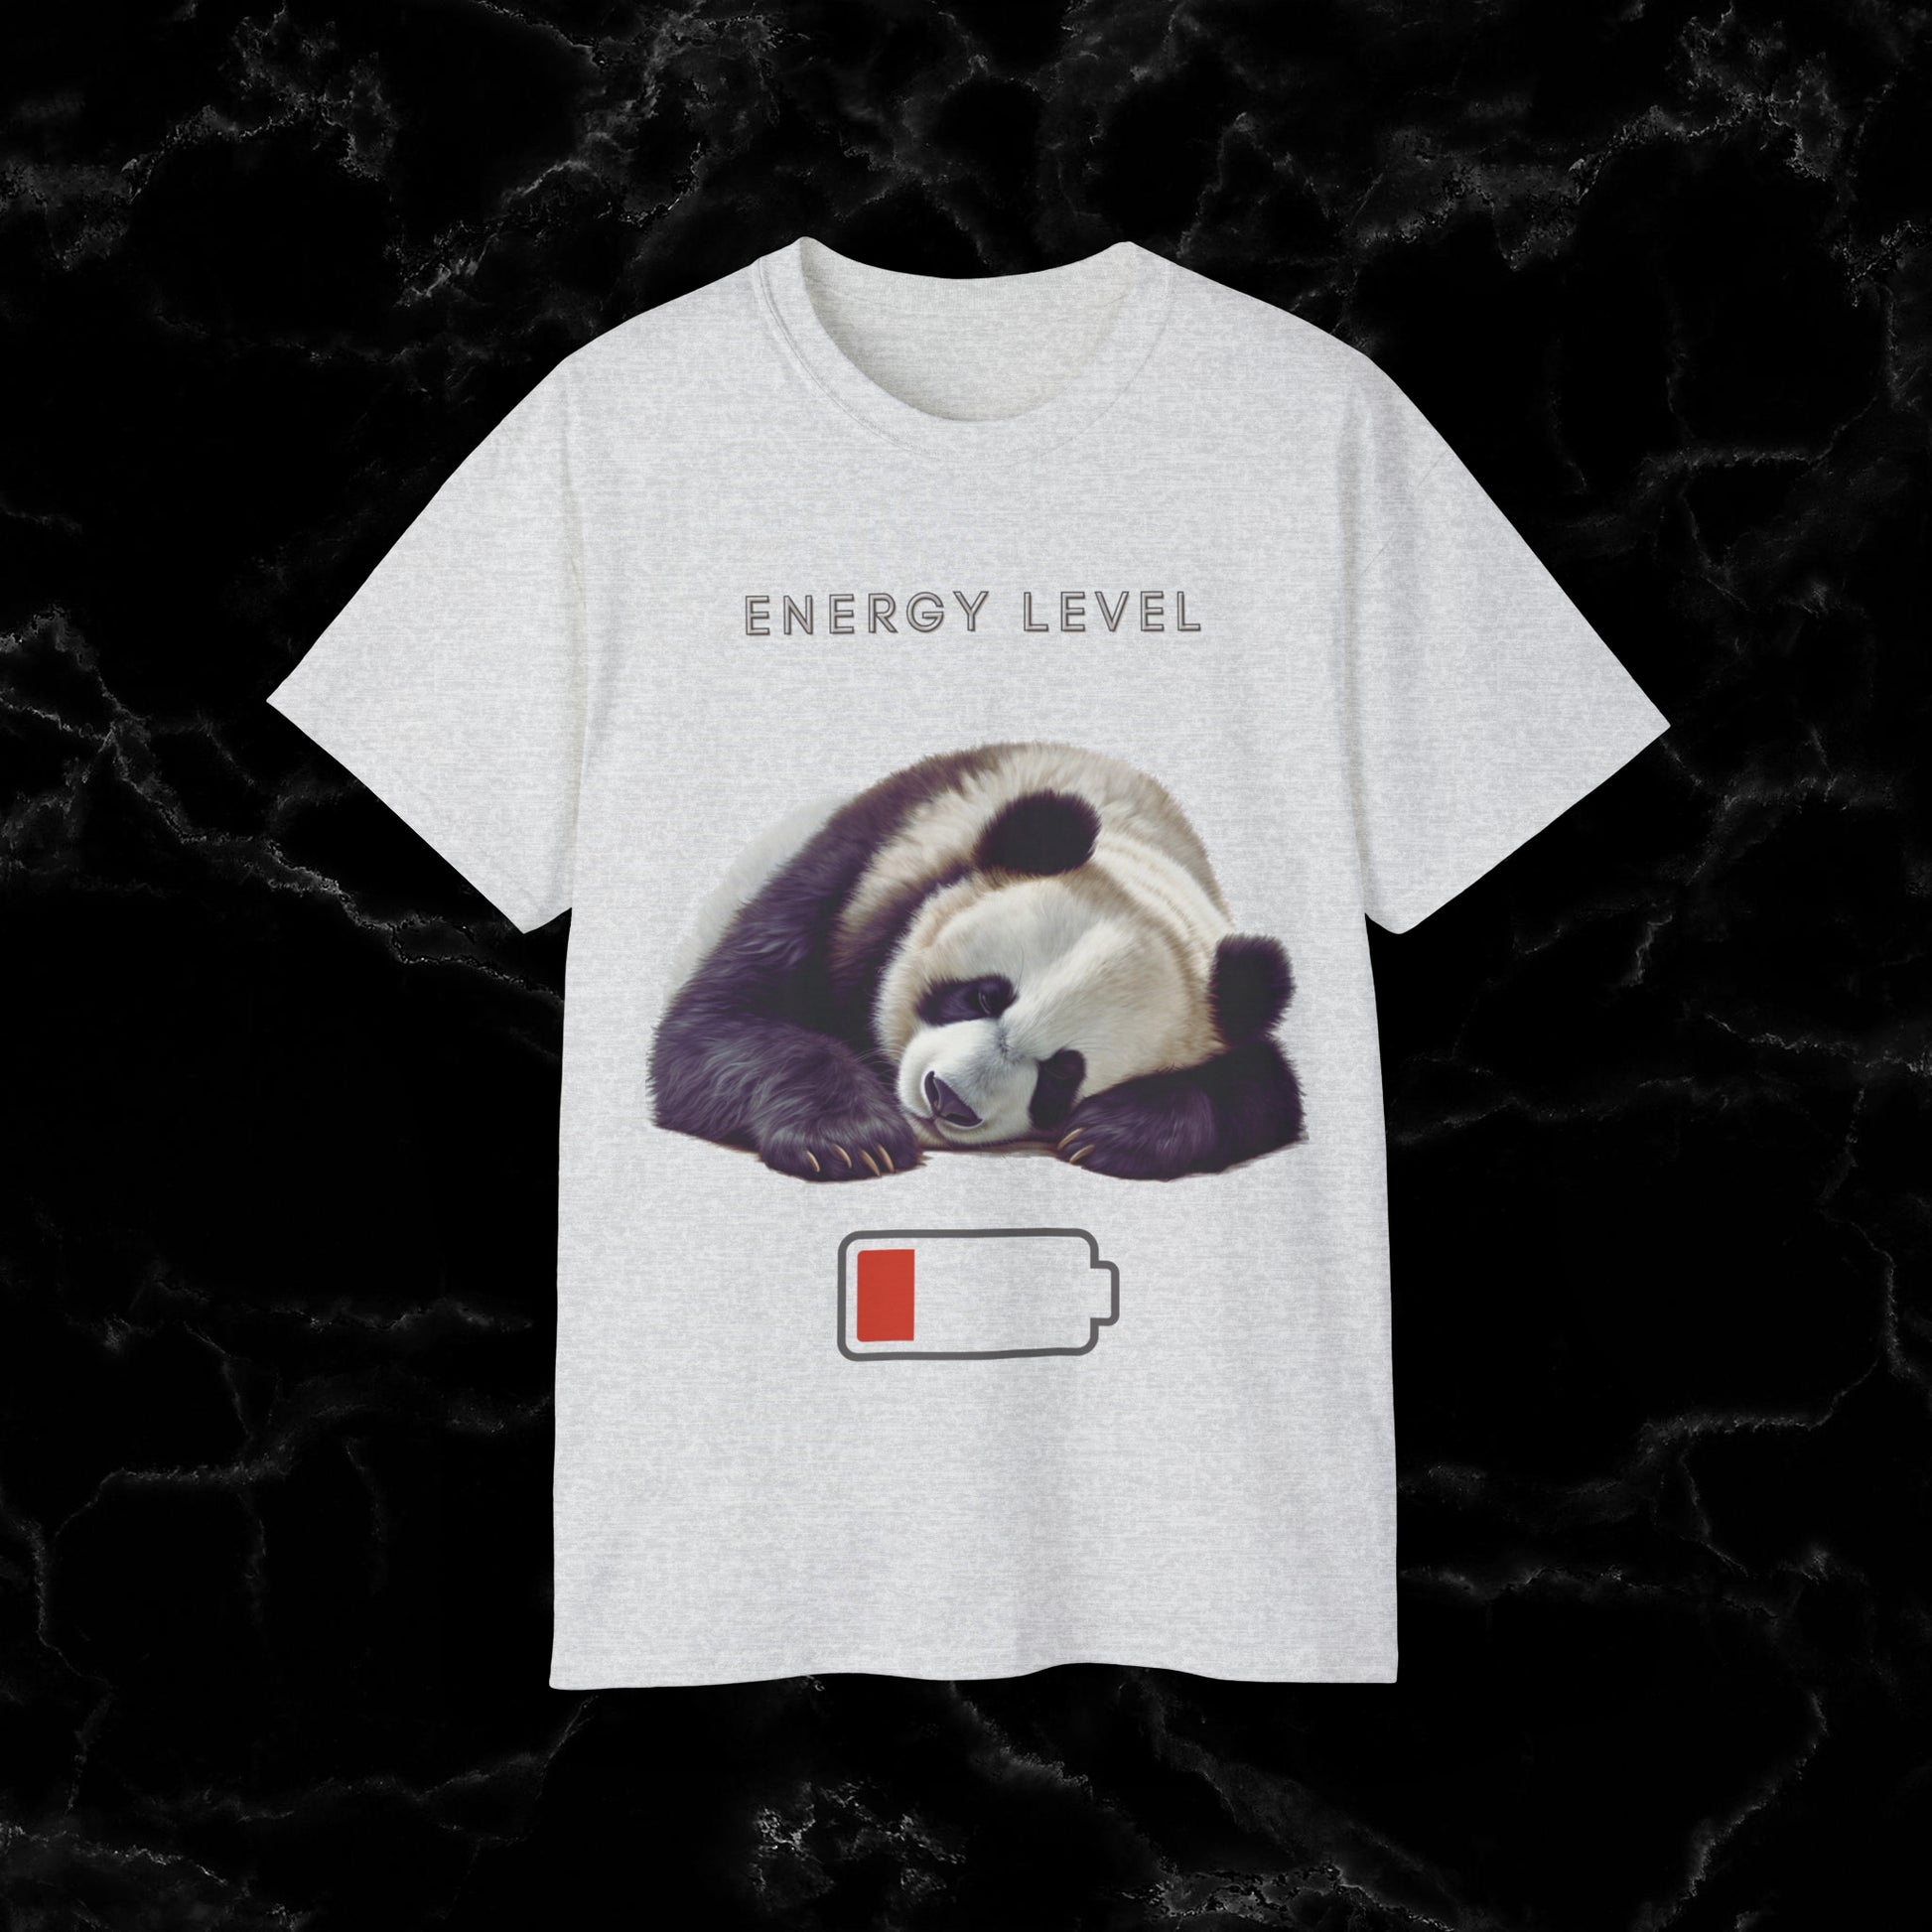 Nap Time Panda Unisex Funny Tee - Hilarious Panda Nap Design - Energy Level T-Shirt Ash S 